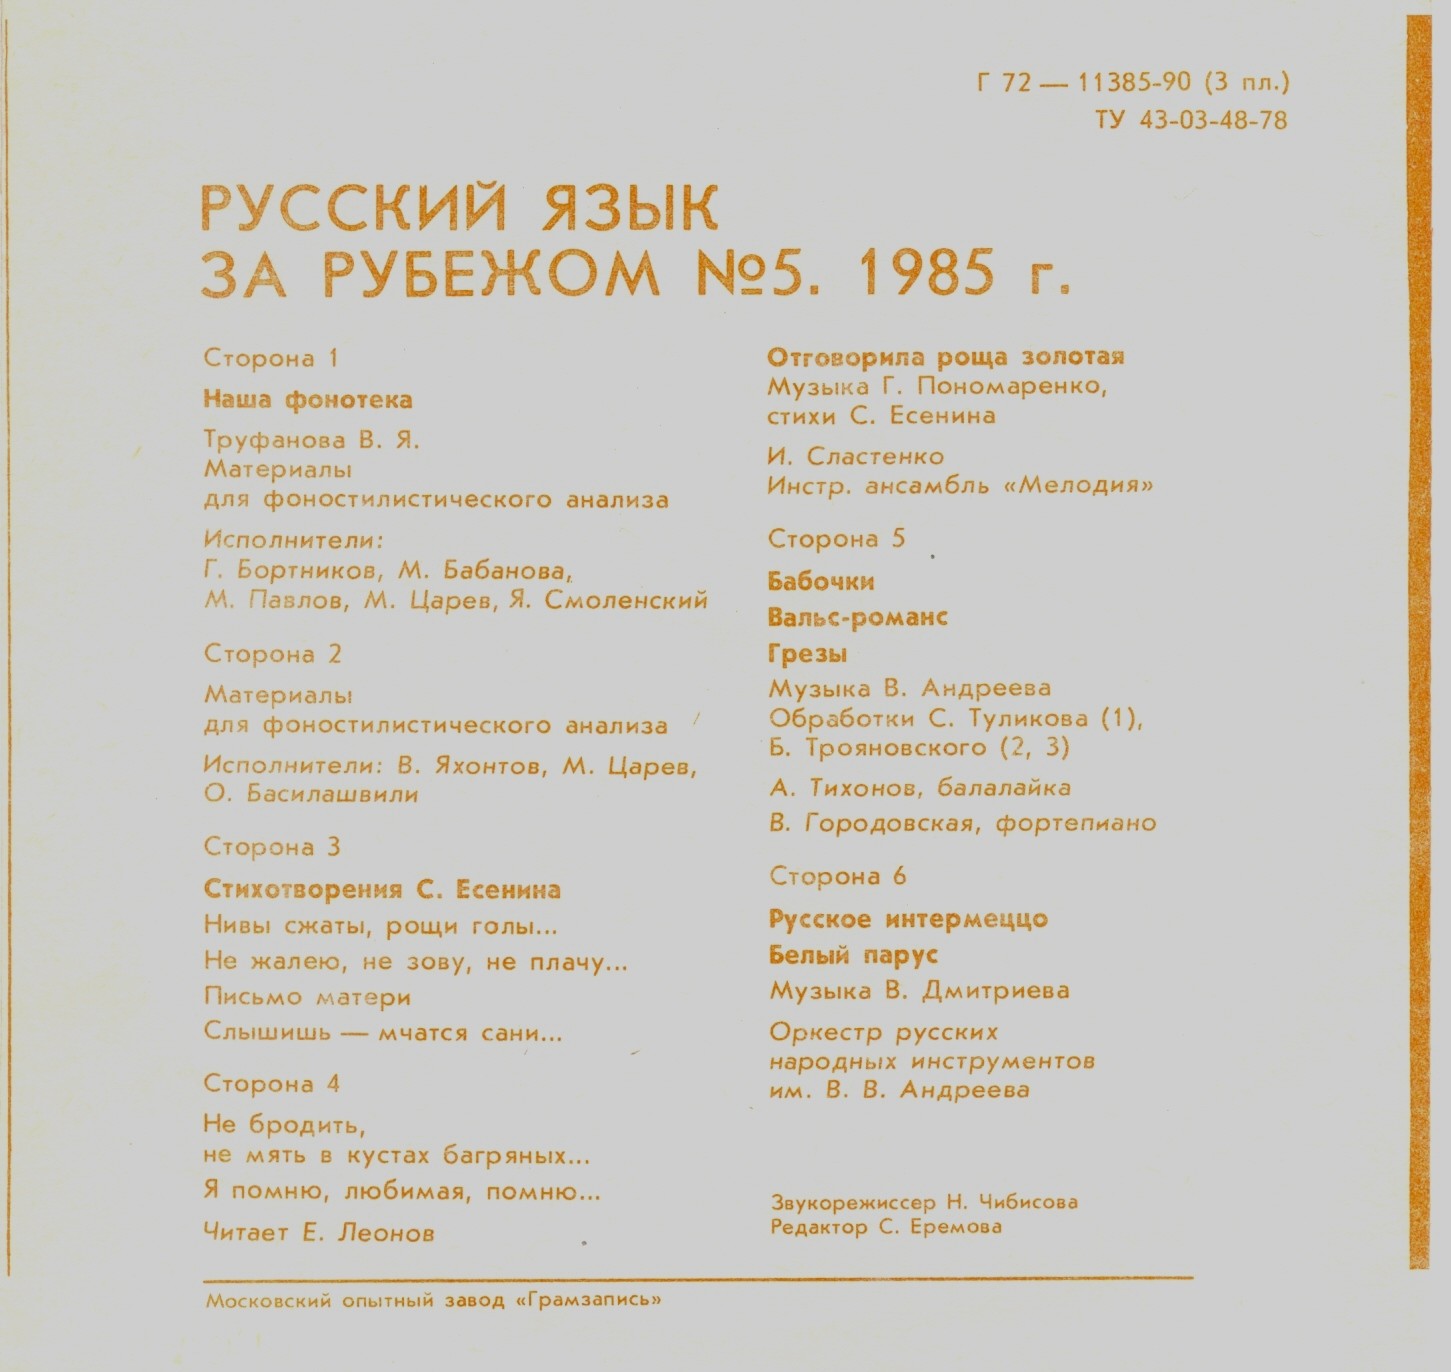 "РУССКИЙ ЯЗЫК ЗА РУБЕЖОМ", № 5 - 1985